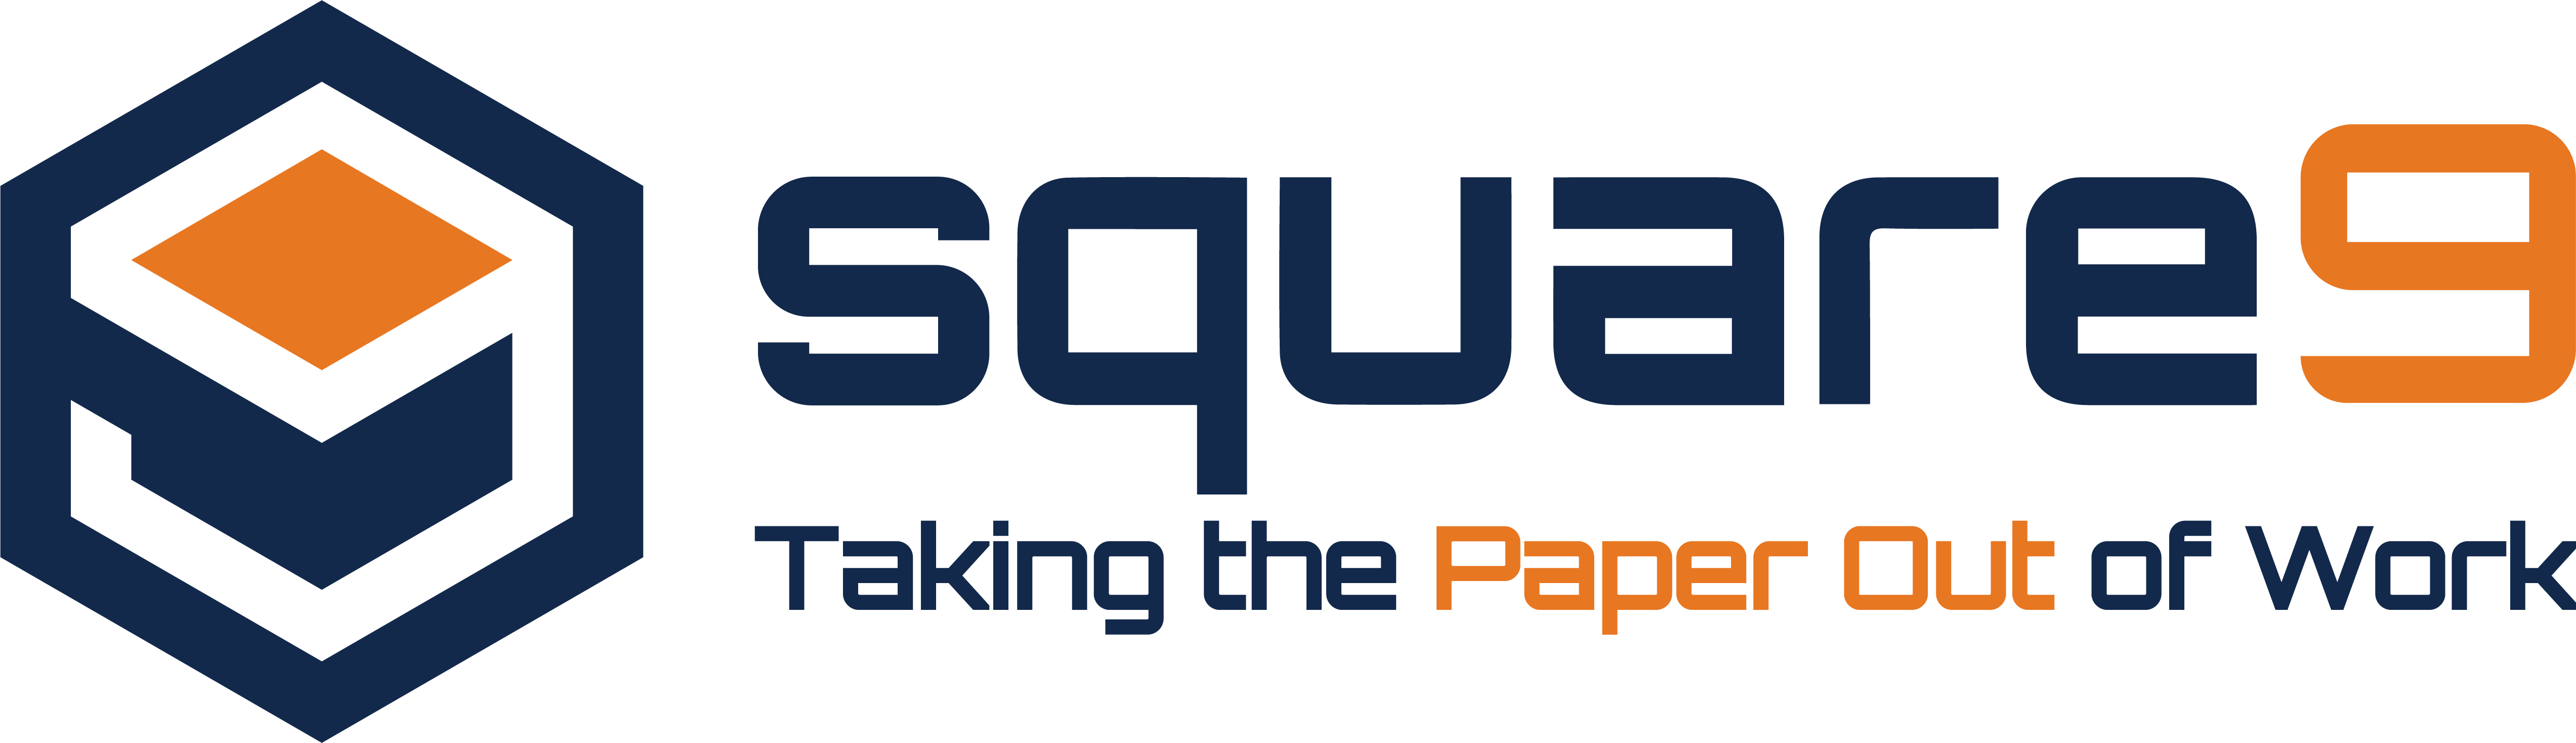 Square9 logo